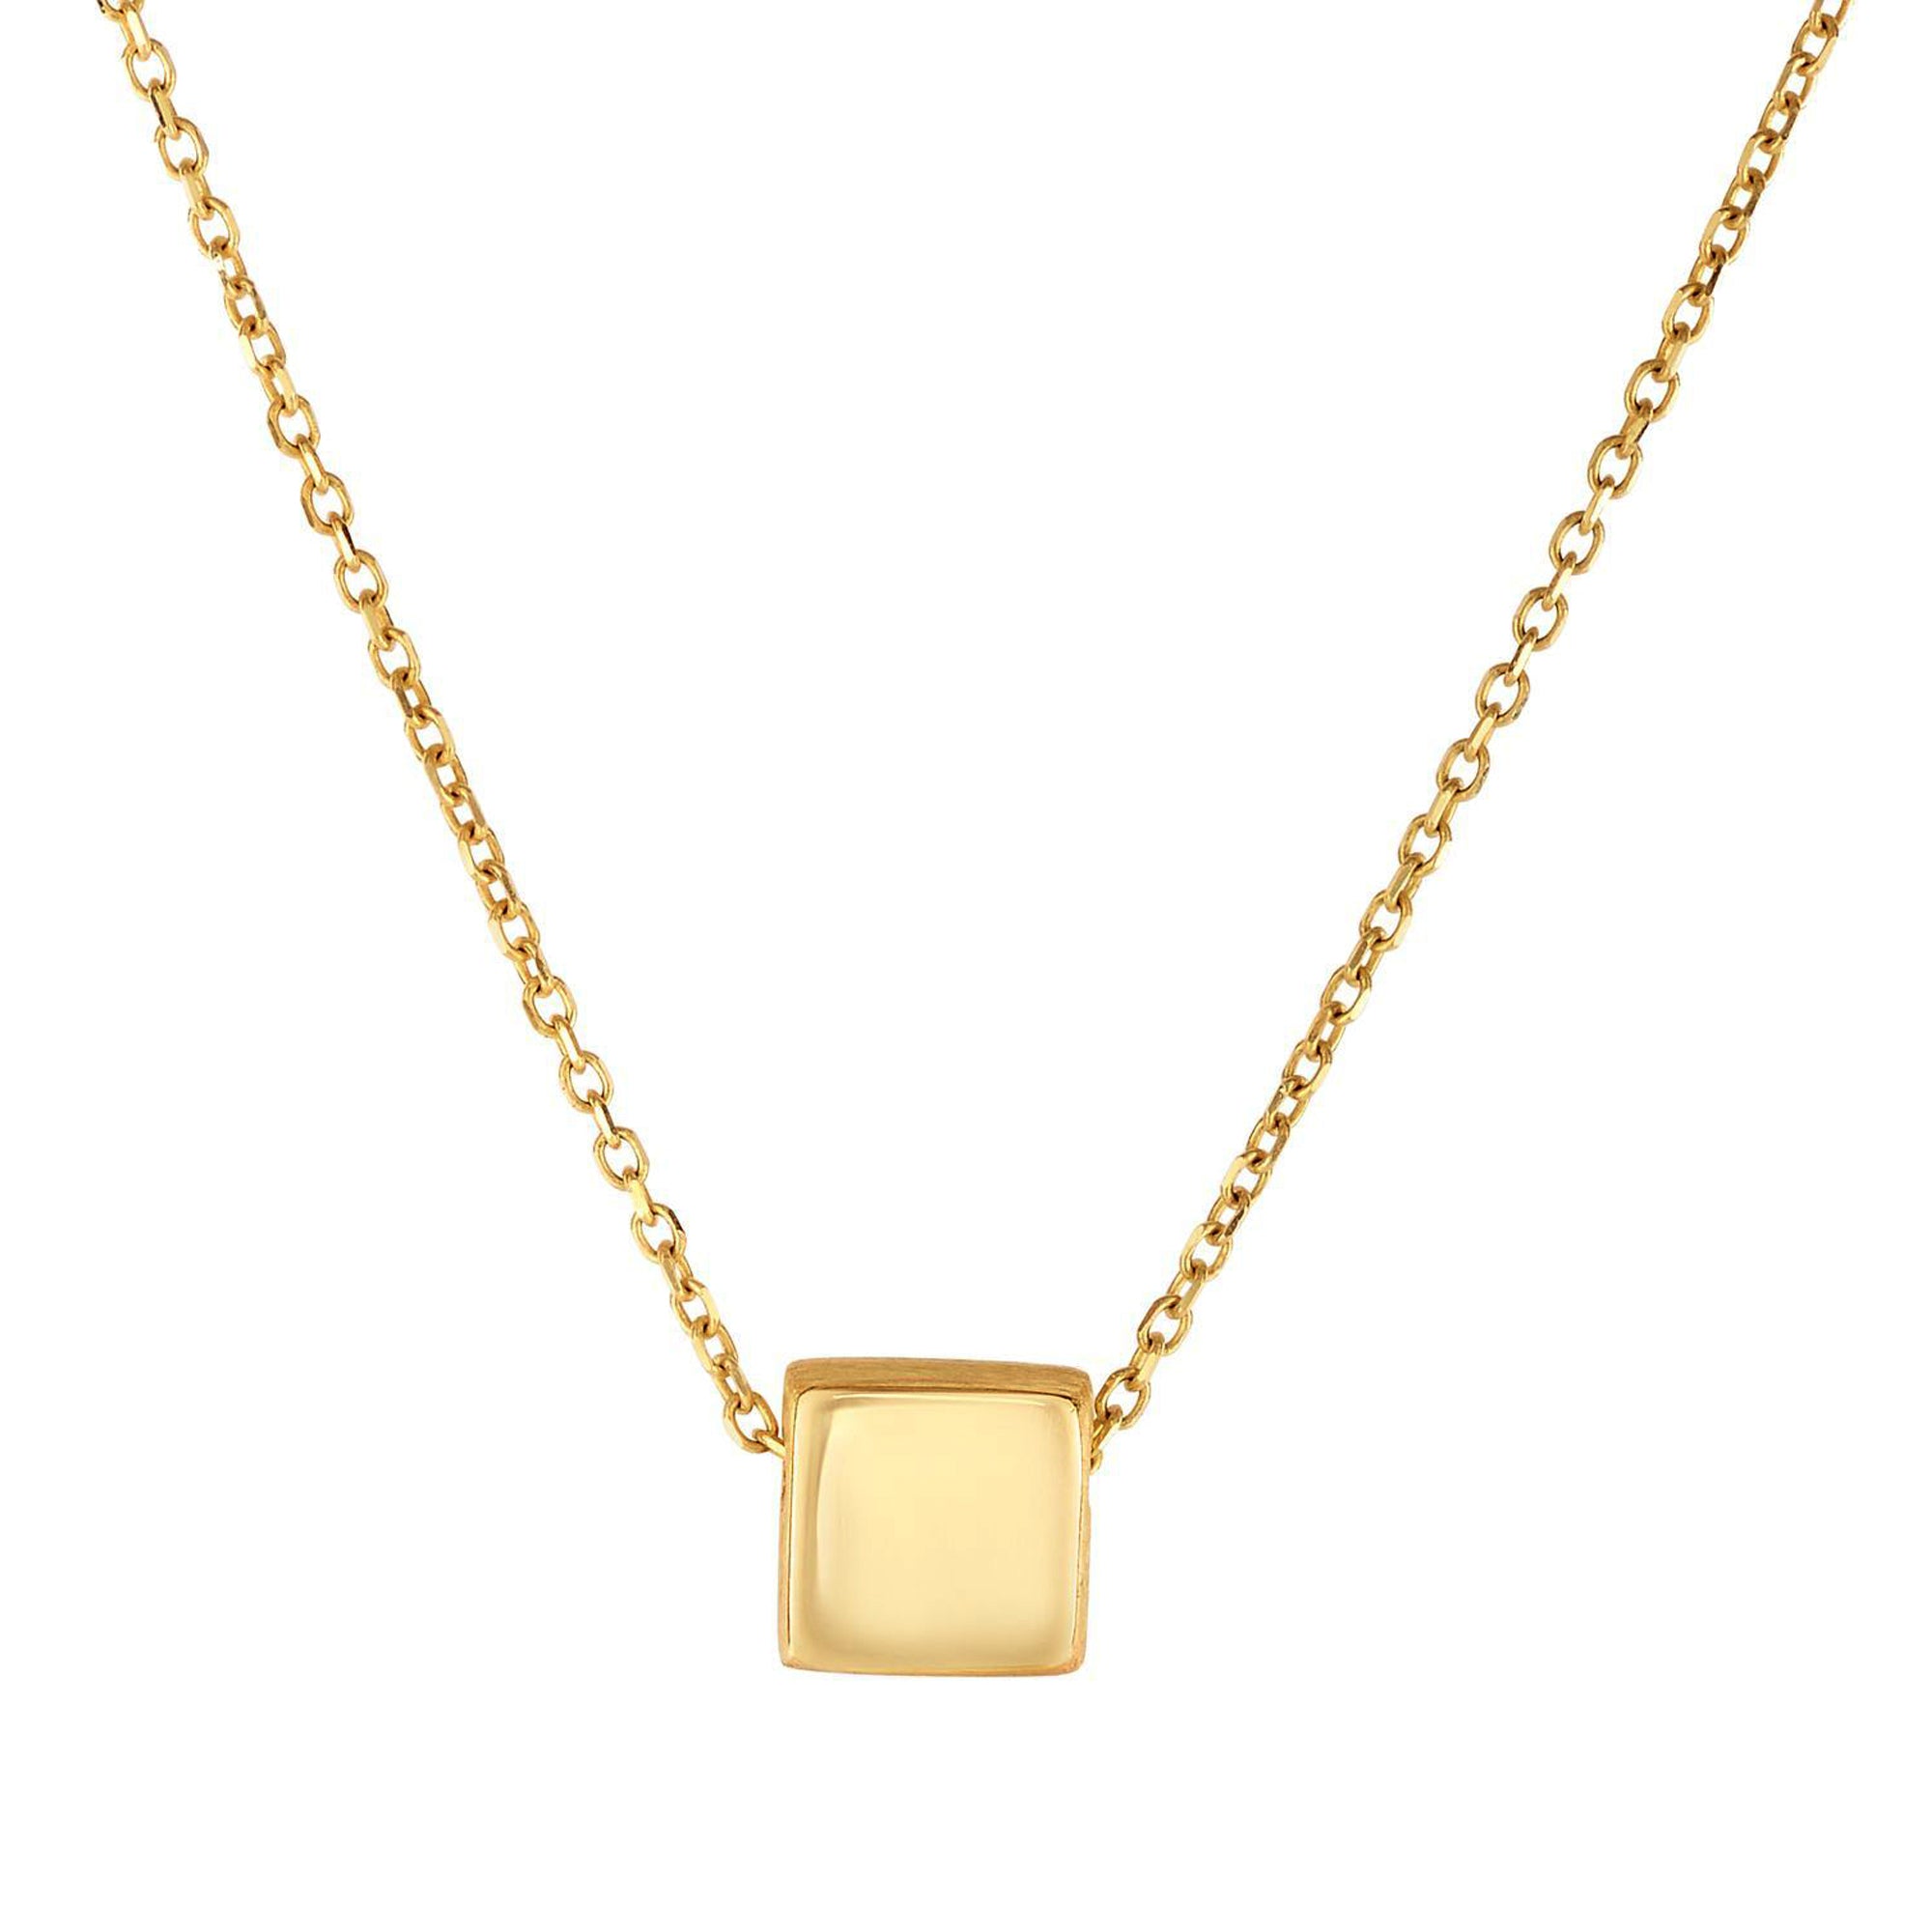 14k Yellow Gold Diamond Cut Square Shape Pendant Chain Necklace, 18"